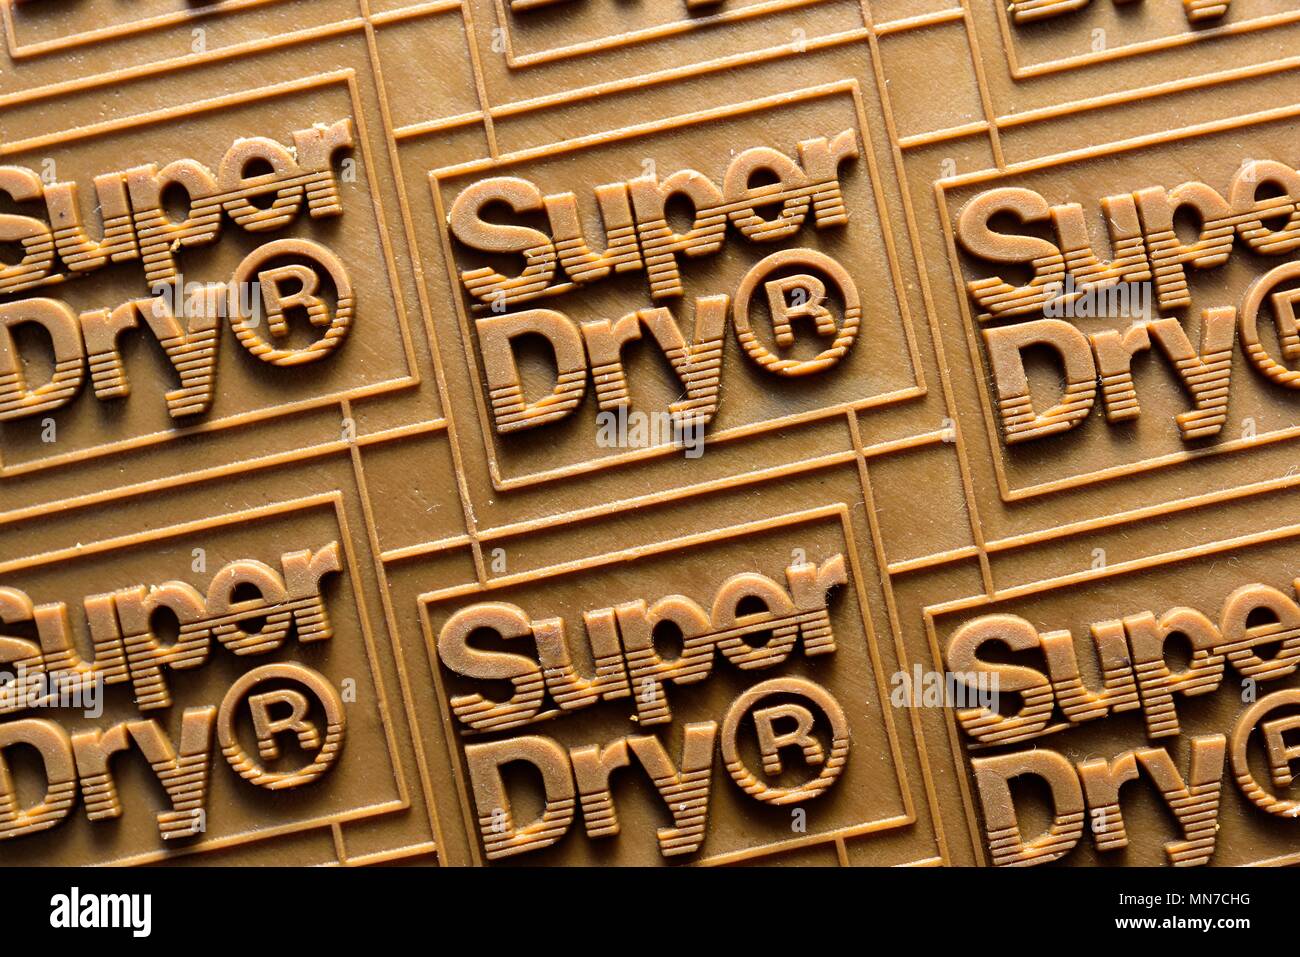 Superdry registered trademark Stock Photo